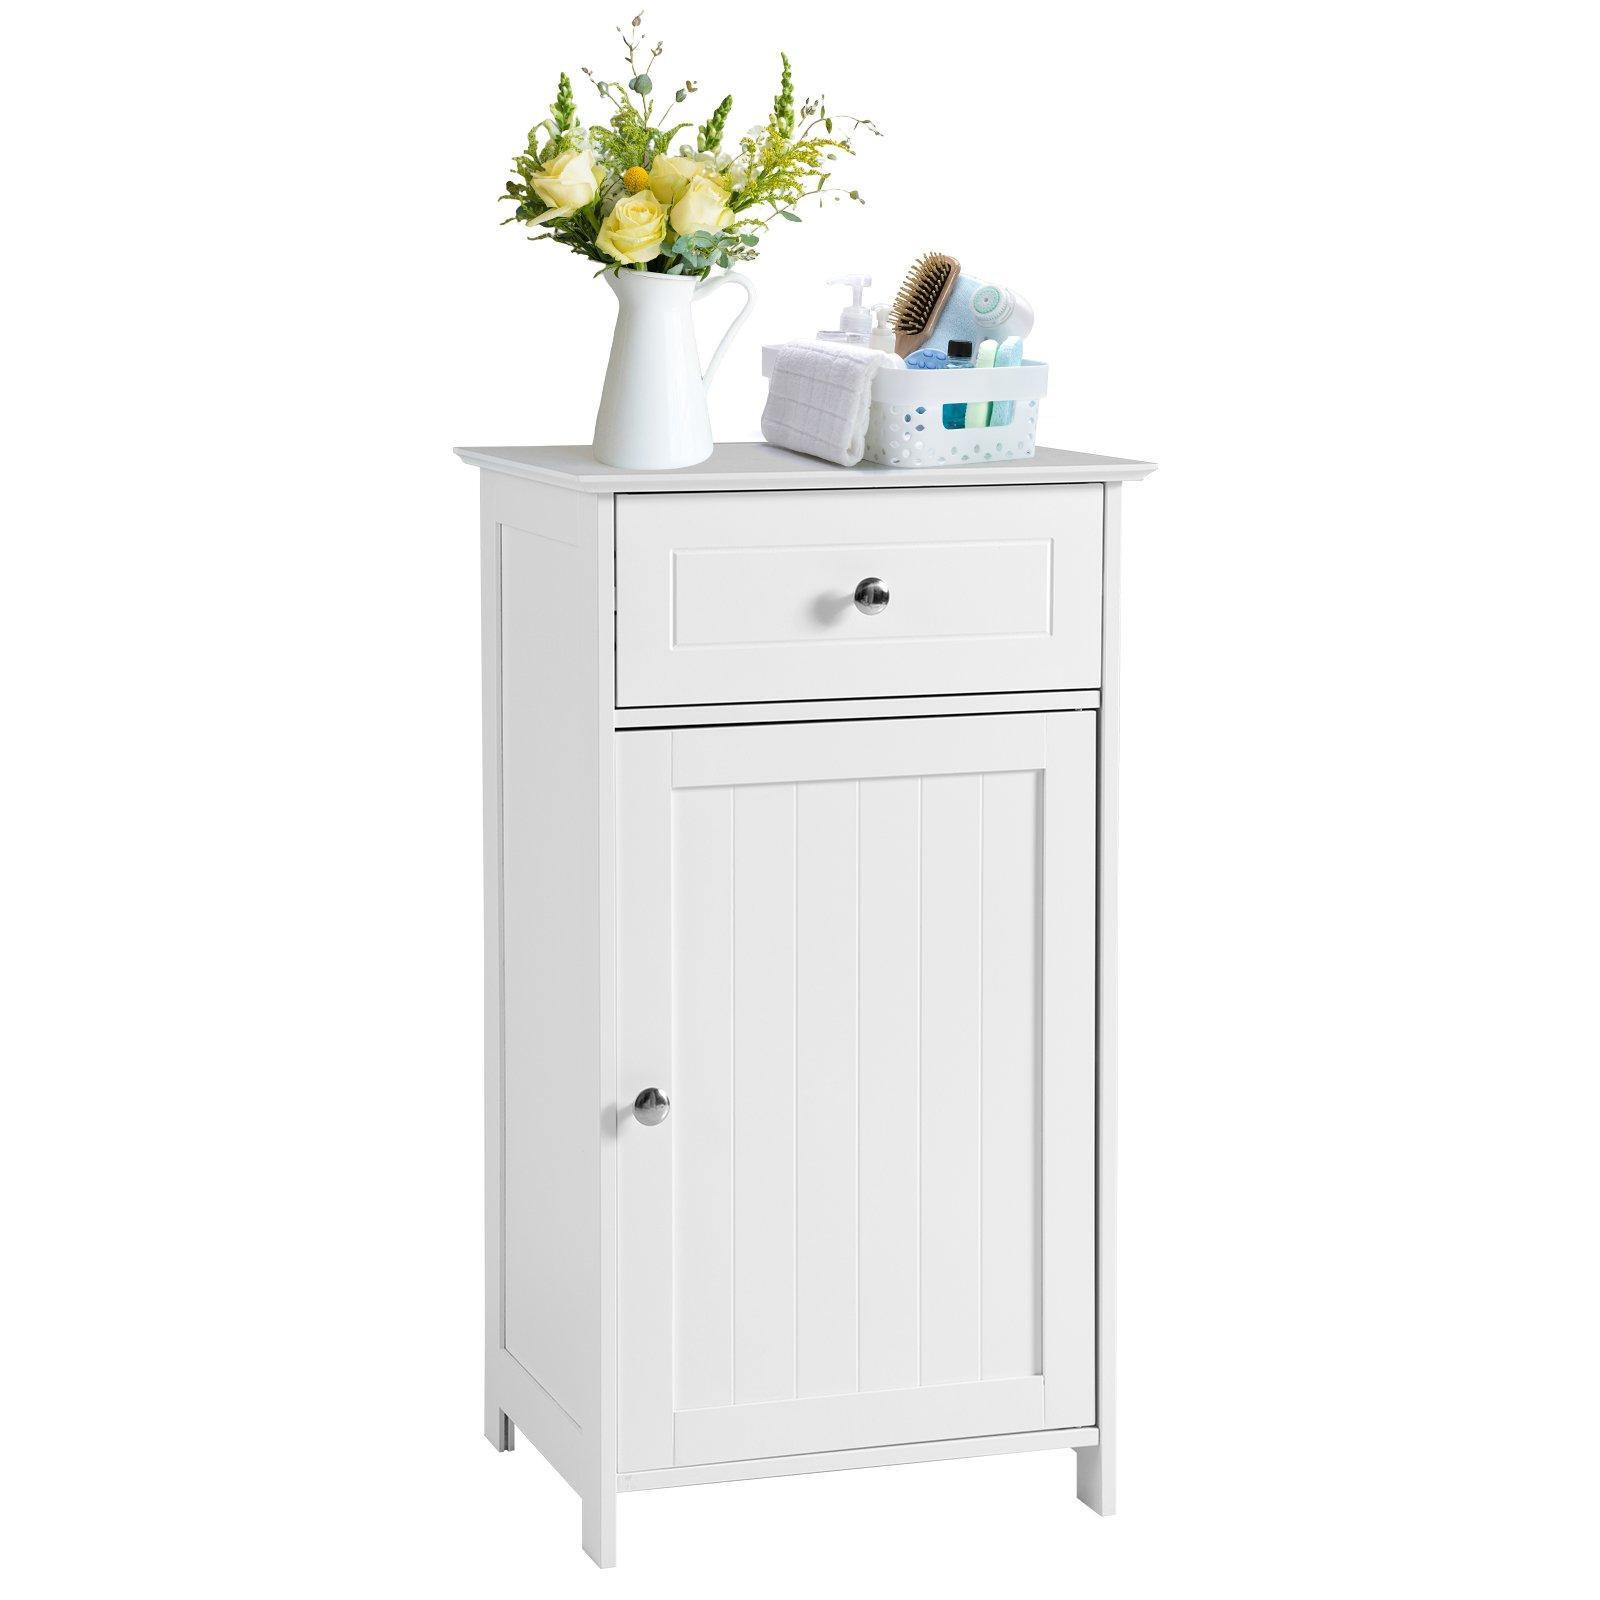 Bathroom Floor Cabinet Wood Storage Organizer Adjustable Shelves W/ Drawer Door - image 1